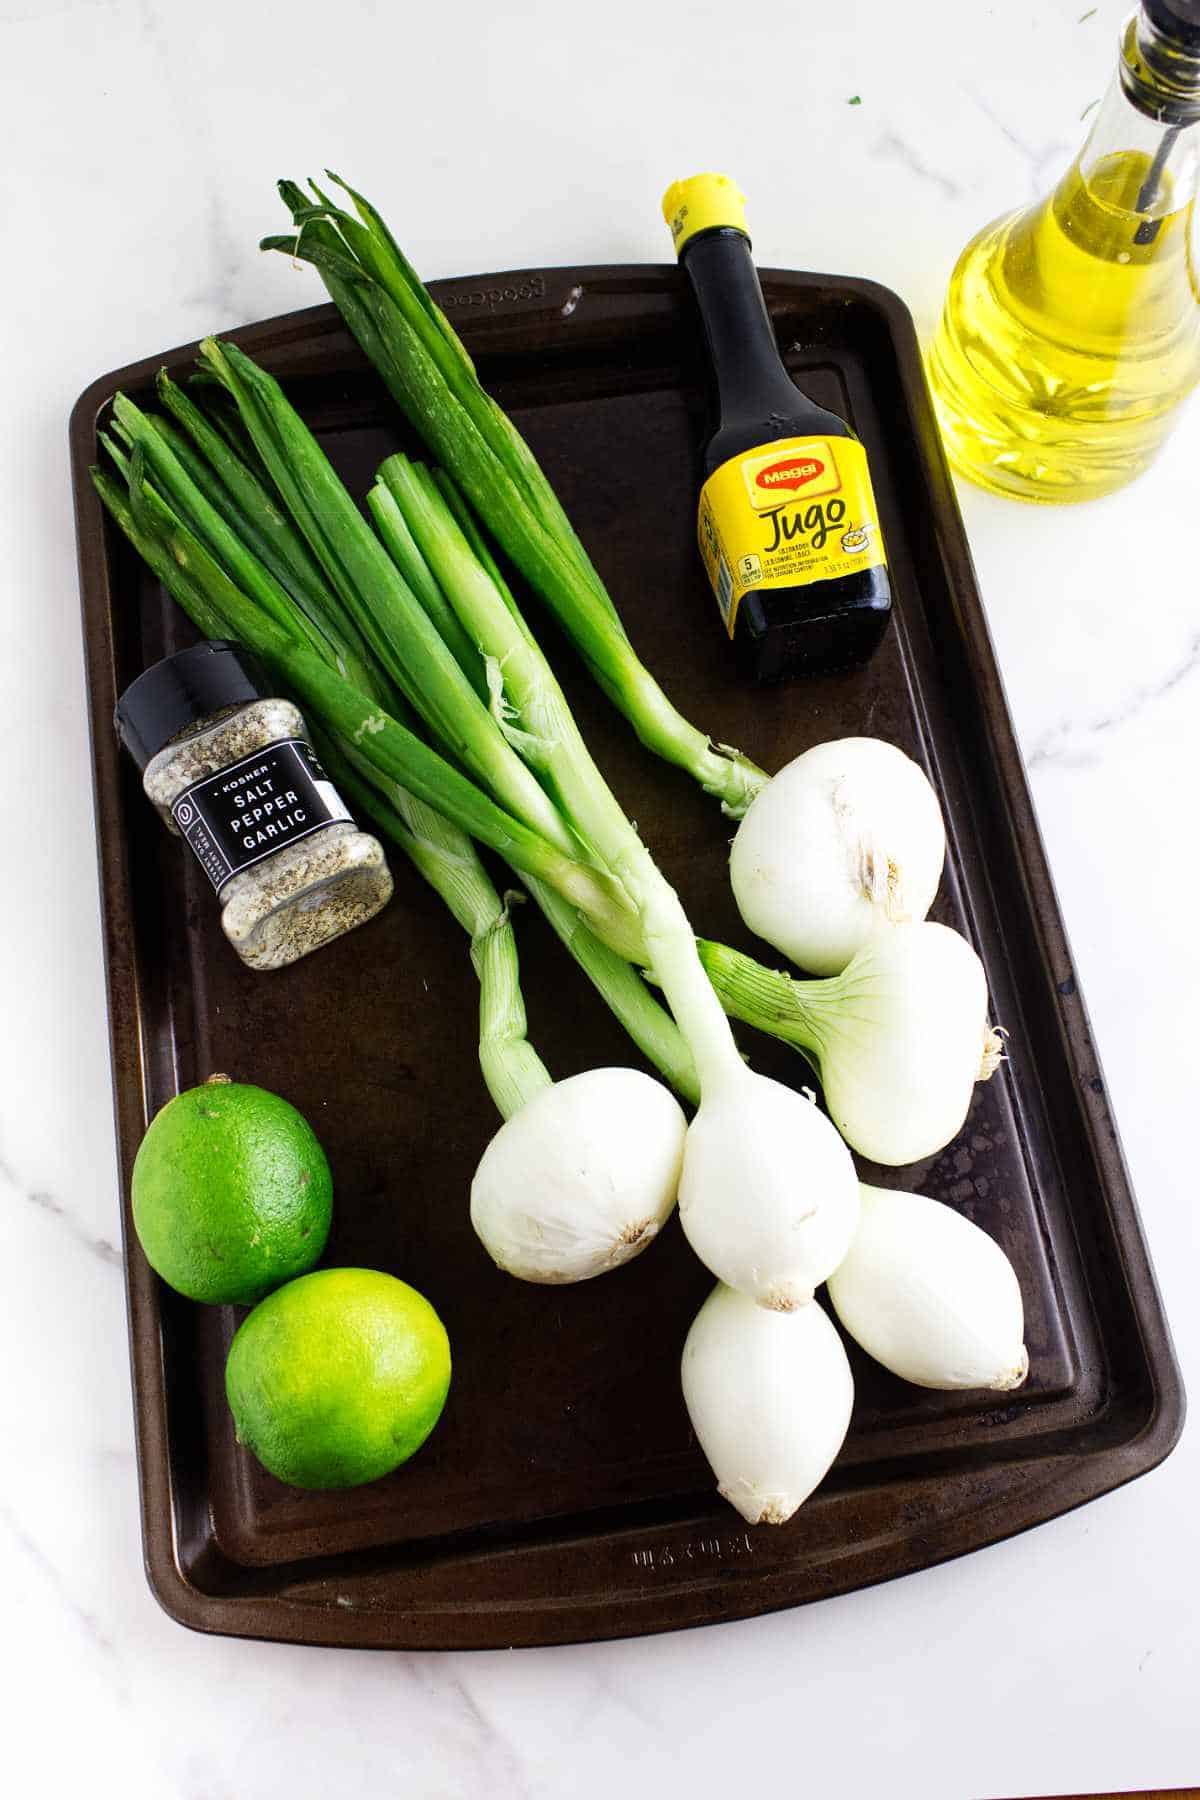 large bulb scallions, Jugo seasoning, olive oil, and seasoning on a sheet pan.